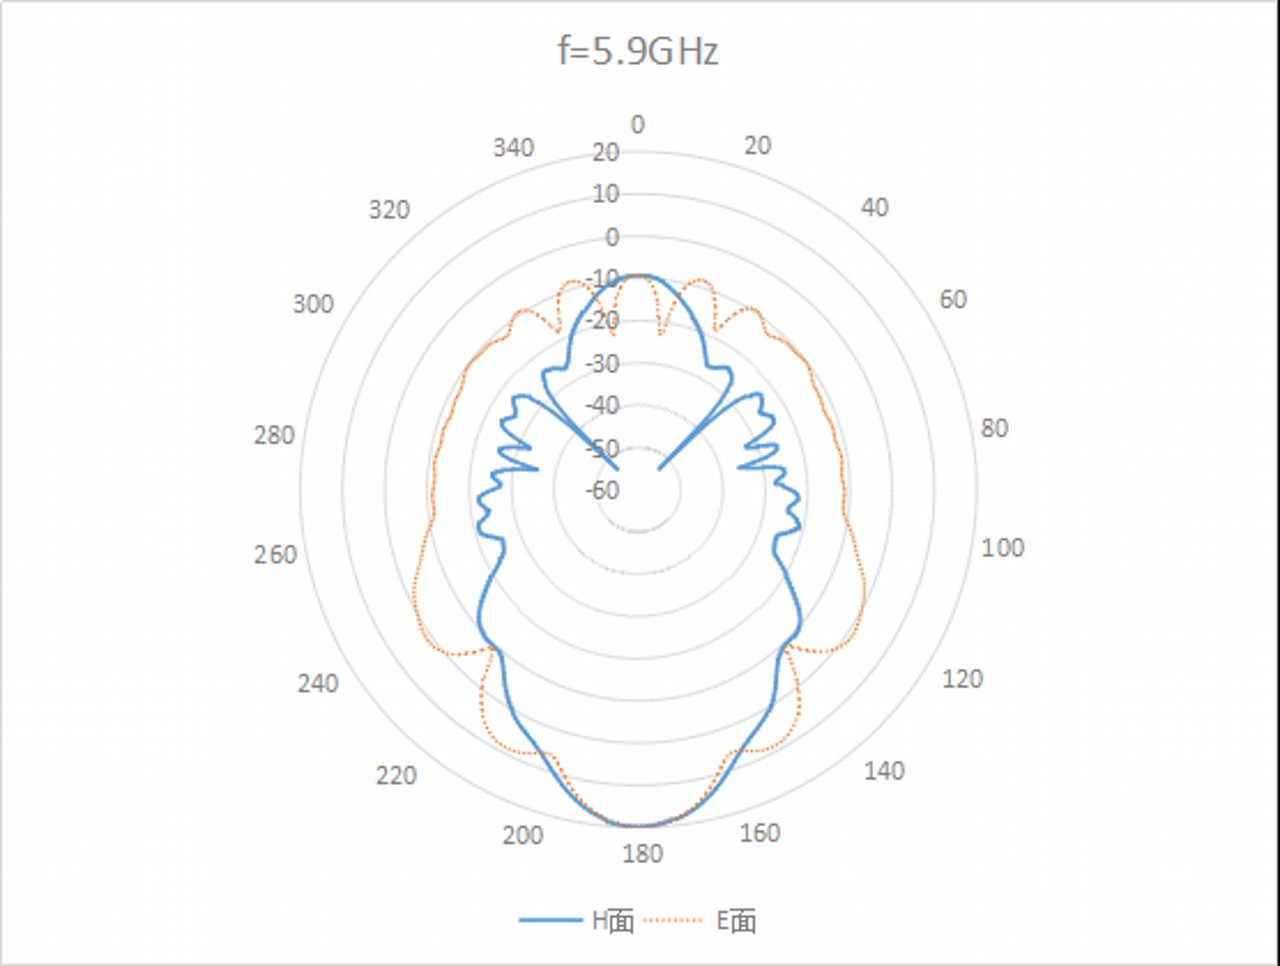 WR-137 Waveguide Standard Gain Horn Antenna. Nominal Gain: 20dBi Gain. Frequency Range: 5.9 GHz to 8.2 GHz - 1